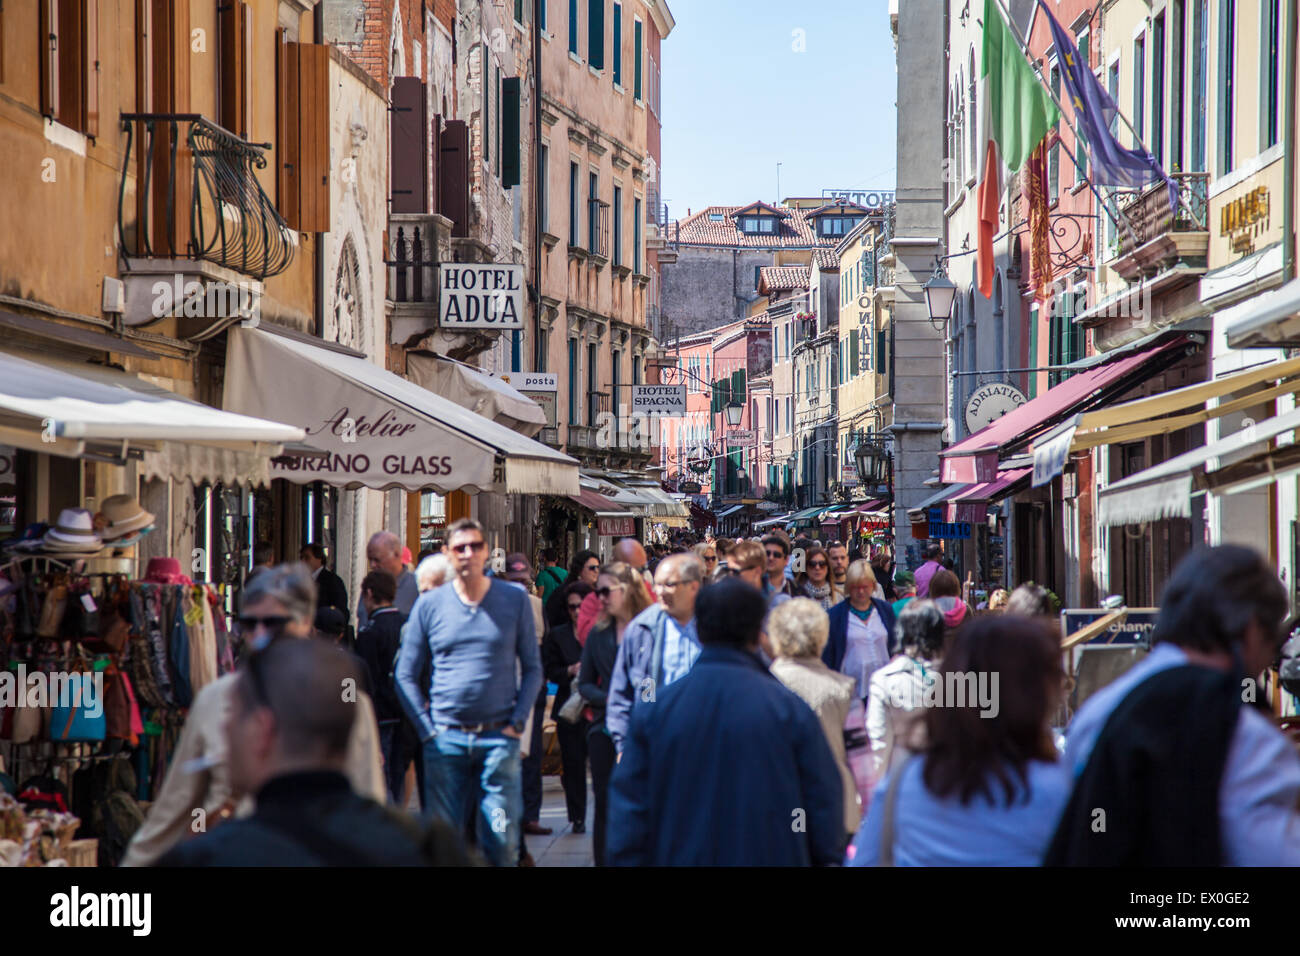 Crowded street scene in Venice, Italy Stock Photo